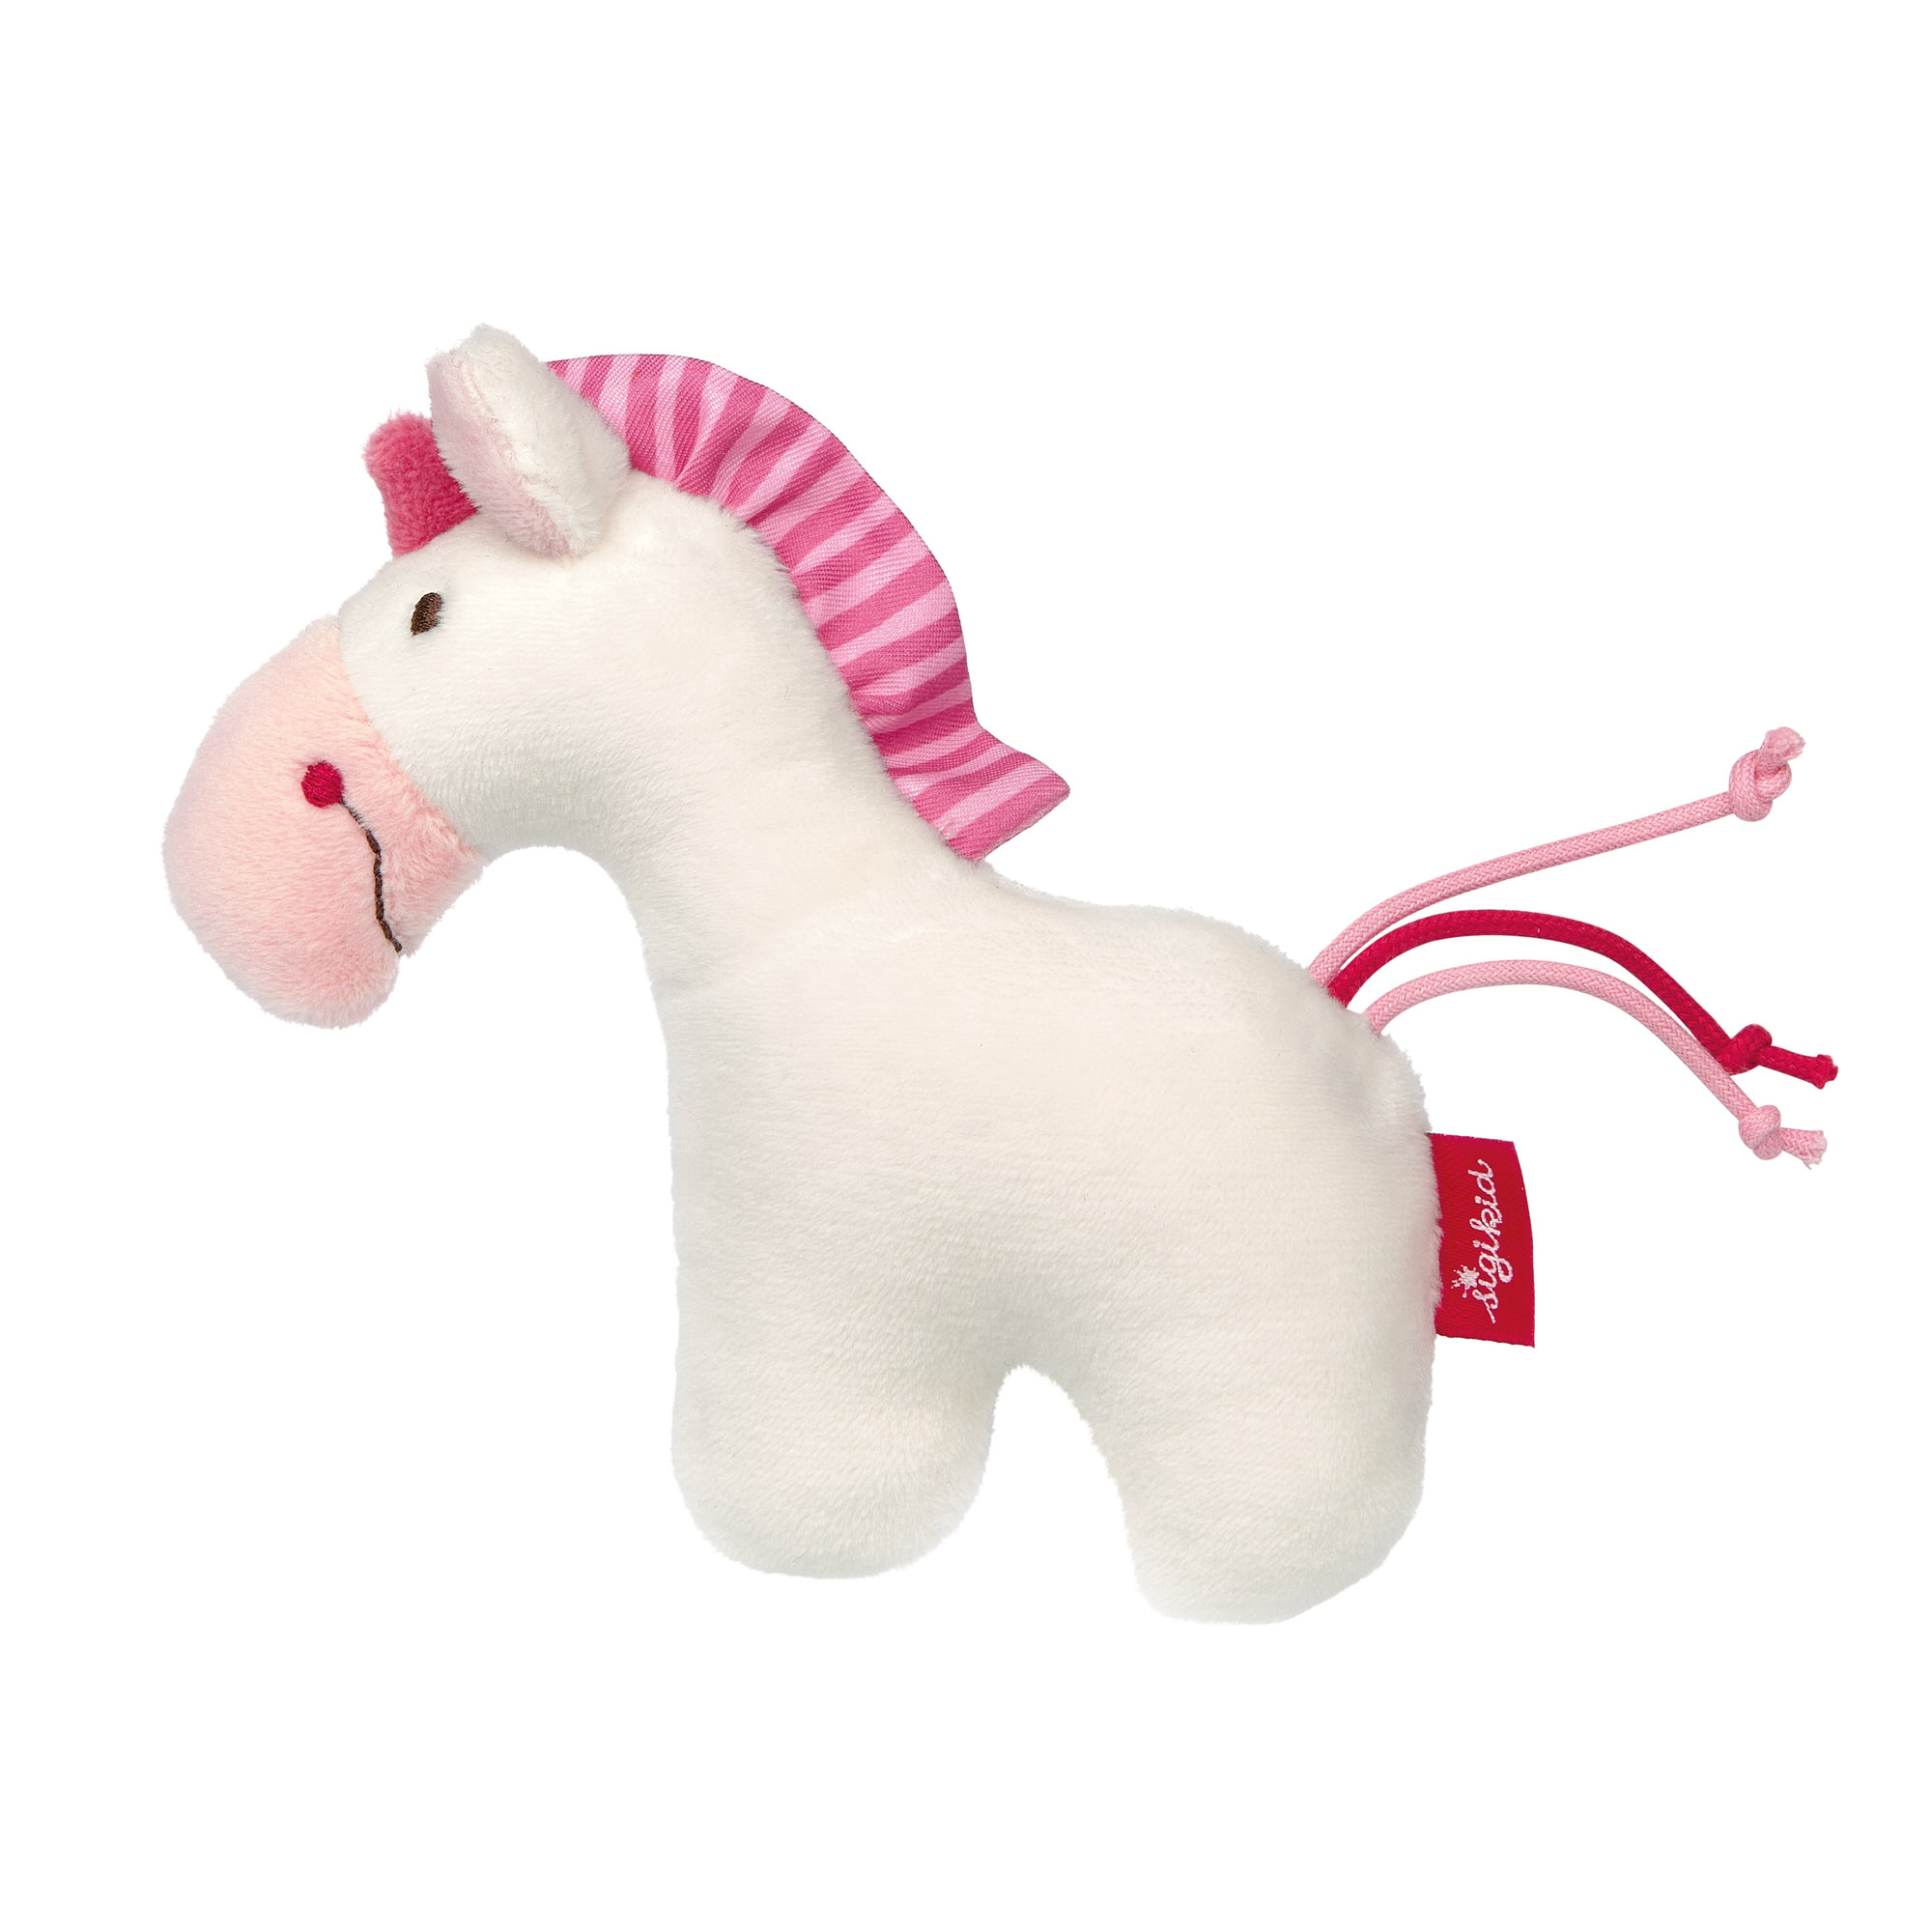 Rattle toy unicorn, Red Stars